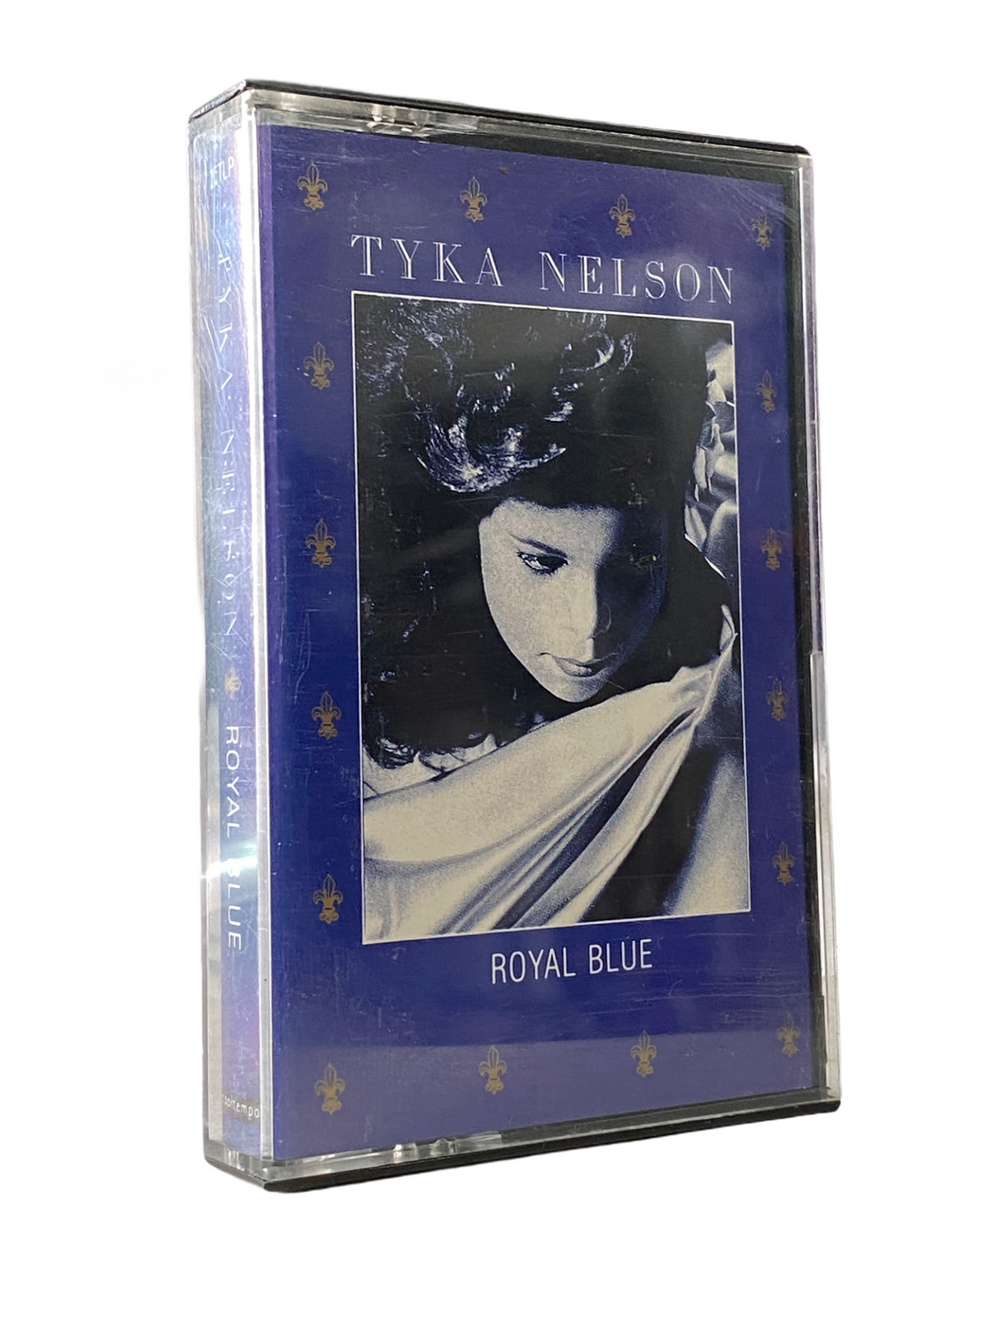 Prince – Tyka Nelson Royal Blue Original Cassette Tape UK 1988 Release Prince